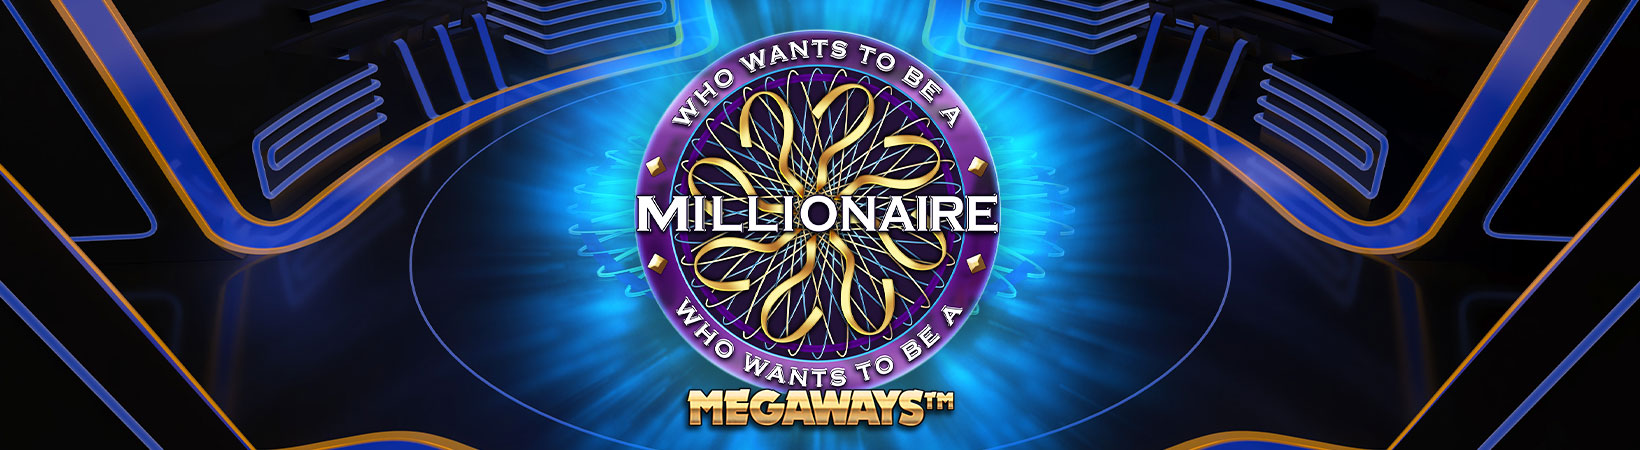 Millionaire Slots App